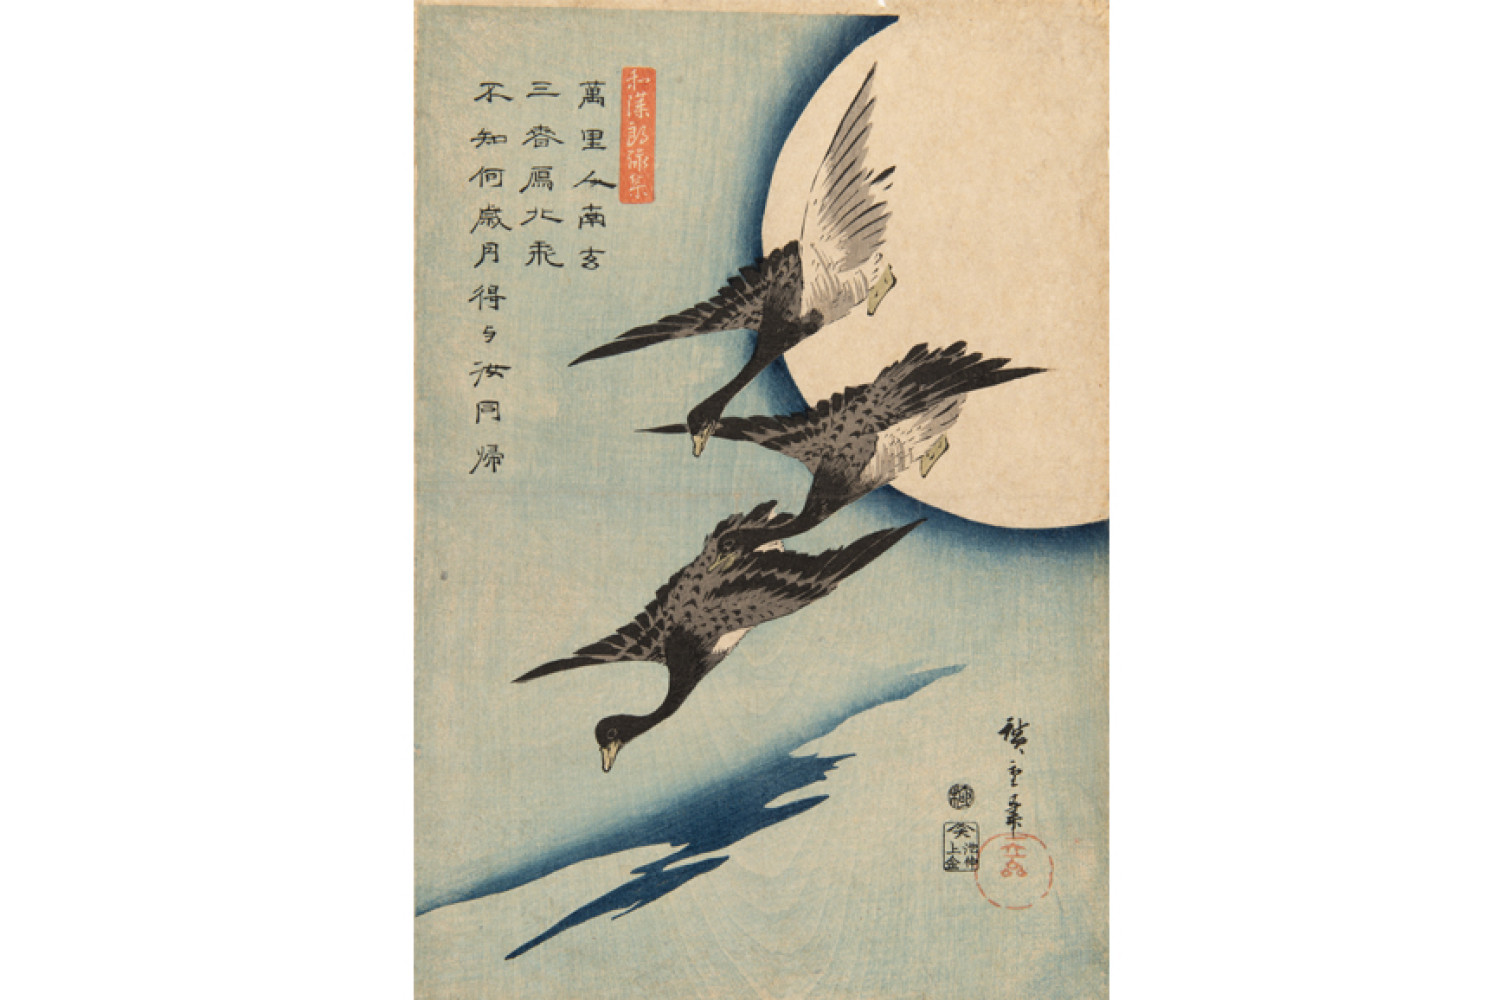 UTAGAWA HIROSHIGE (1797—1858) Geese Flying before a Full Moon, ca. 1837-43. Color woodblock print, 14 7/8 x 10 1/4 inches.  